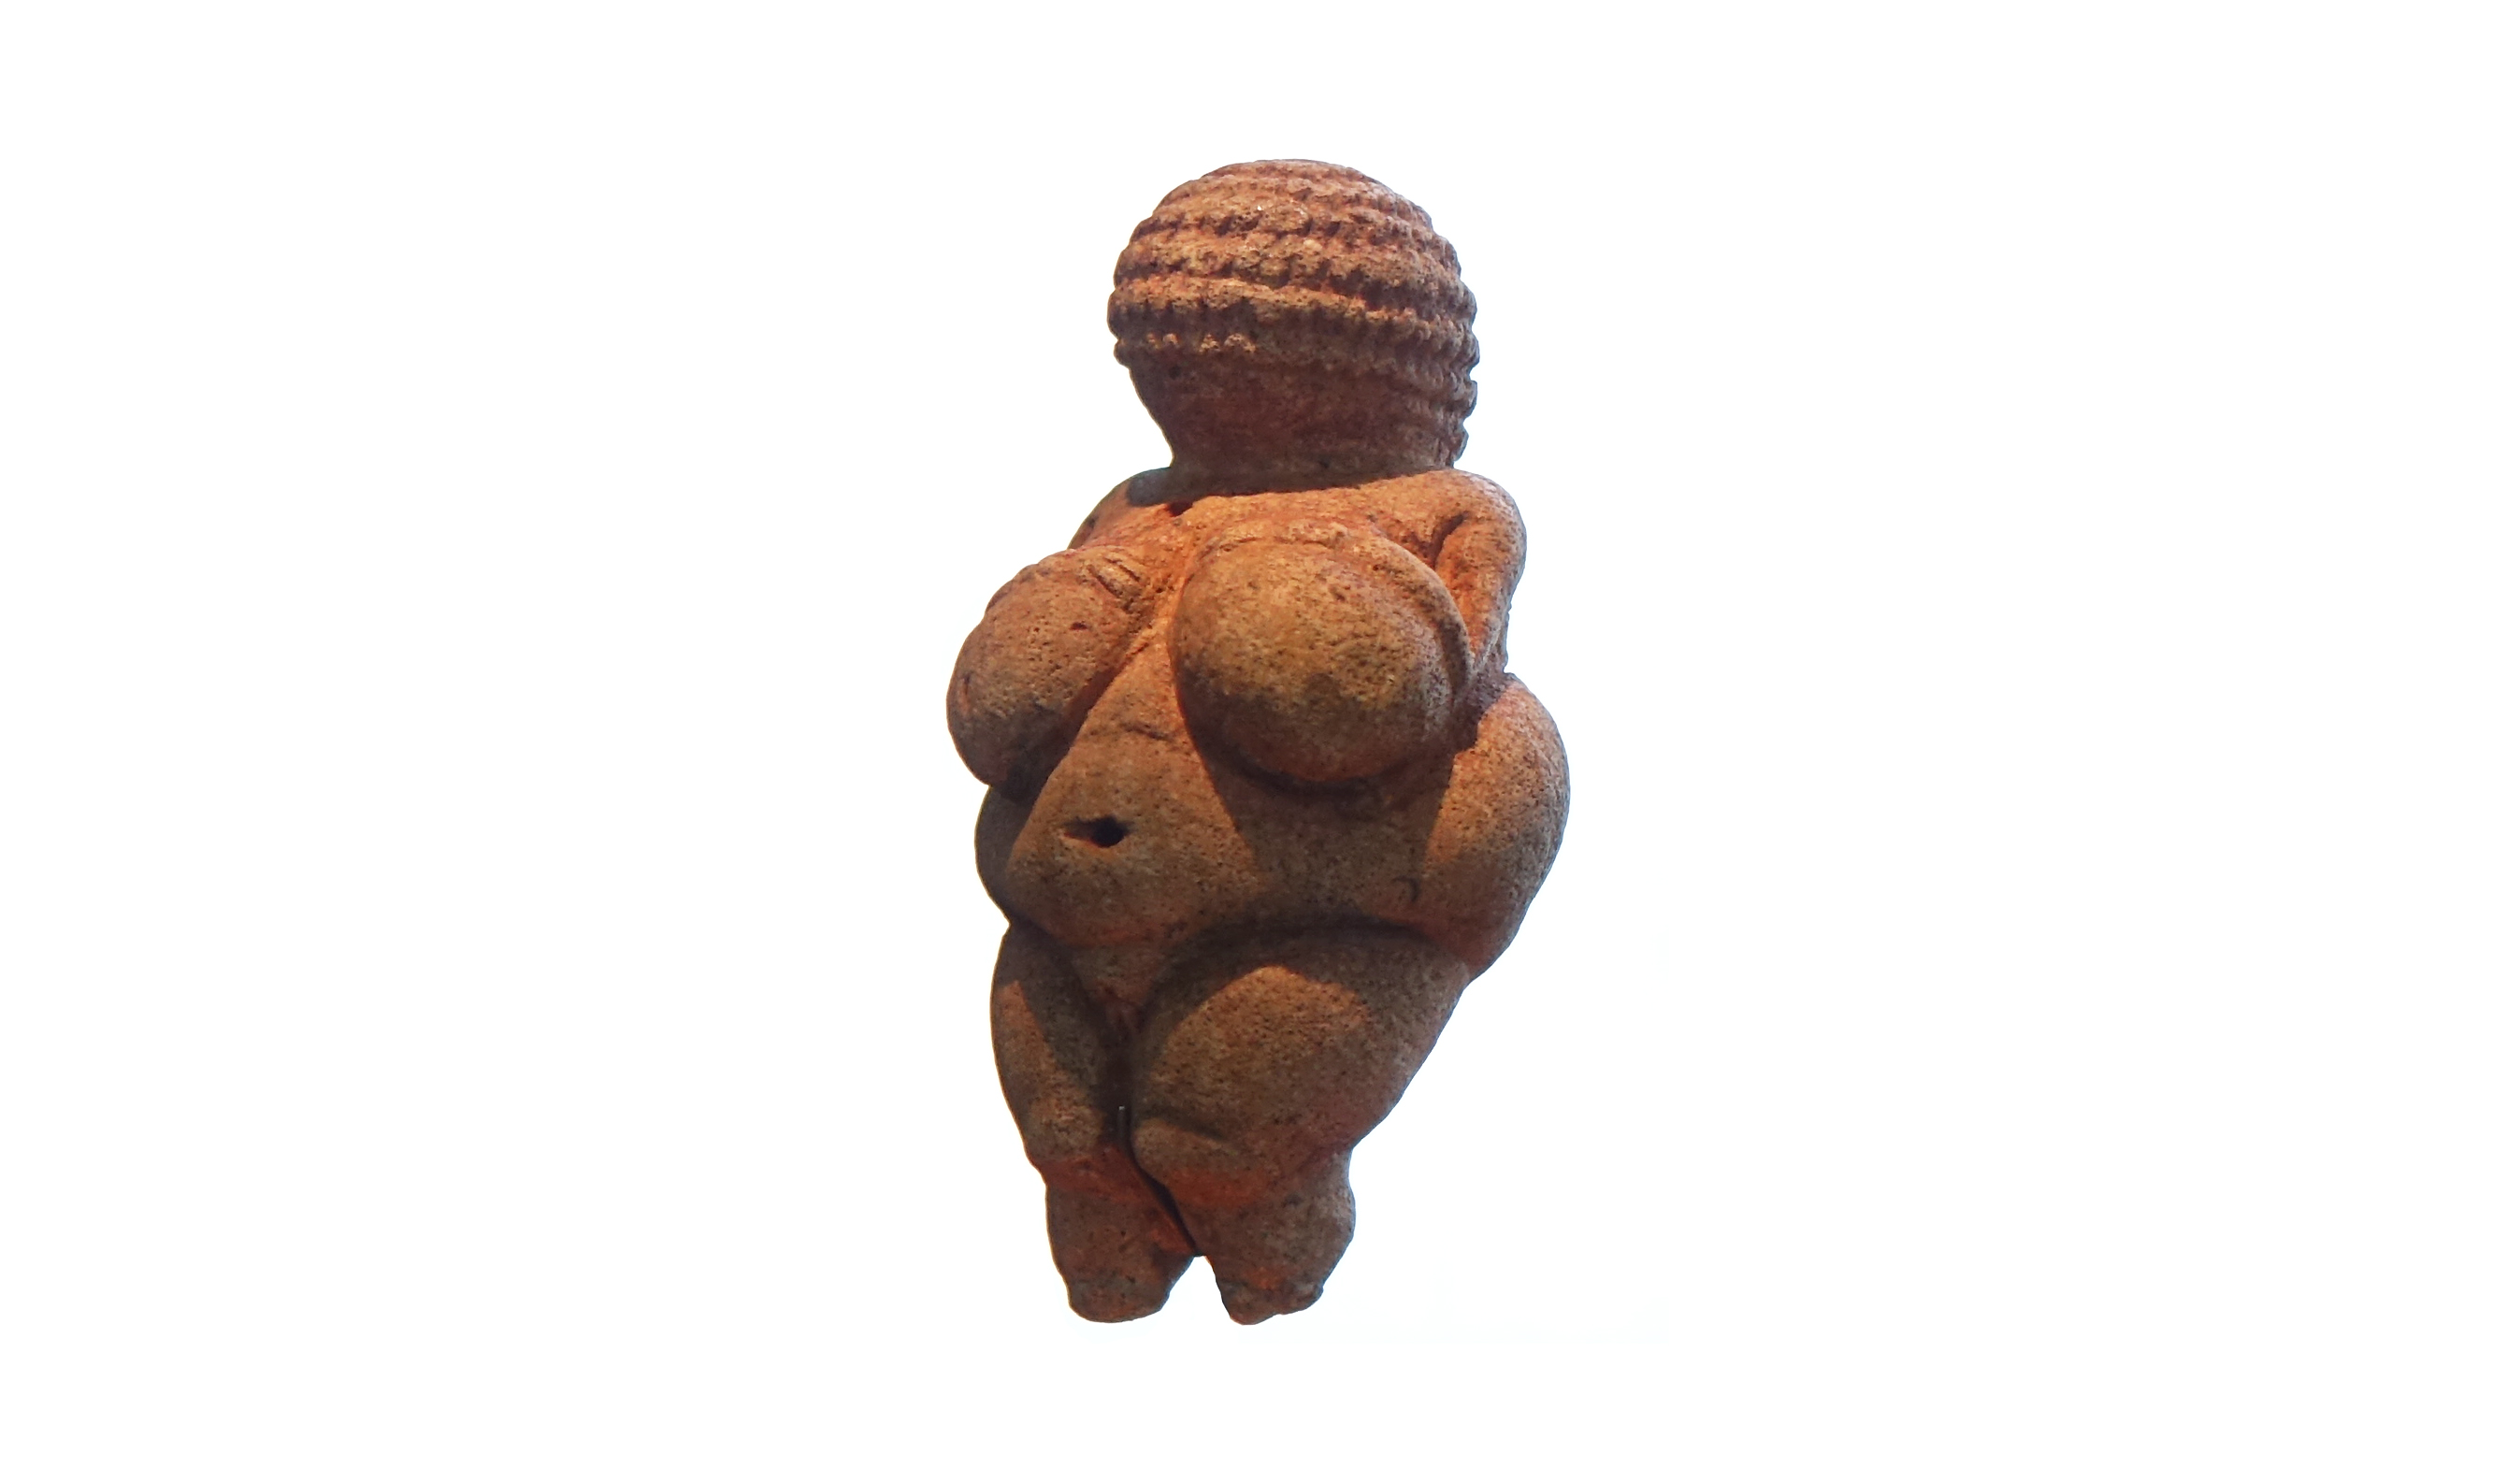 Venus de Willendorf, c. 24,000-22,000 B.C.E., piedra caliza 11.1 cm de altura (Museo Naturhistorisches, Viena)